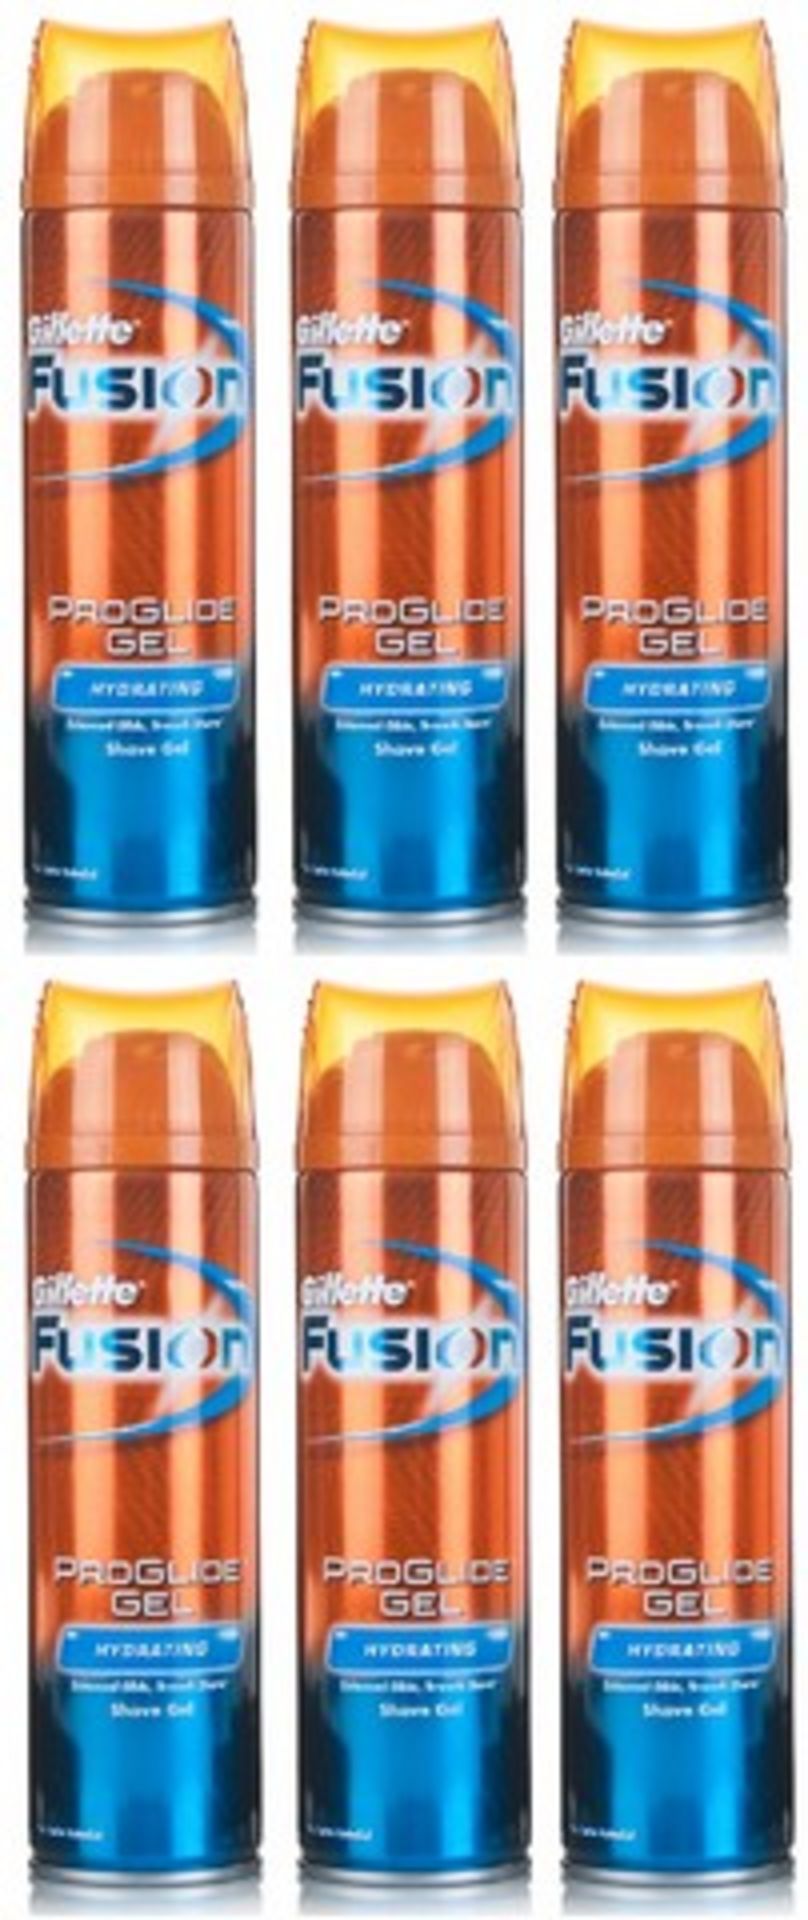 V Brand New A Lot of Six Gillette Fusion Shaving Gel 200ml - Hydrating Hydra Gel - Advanced Glide